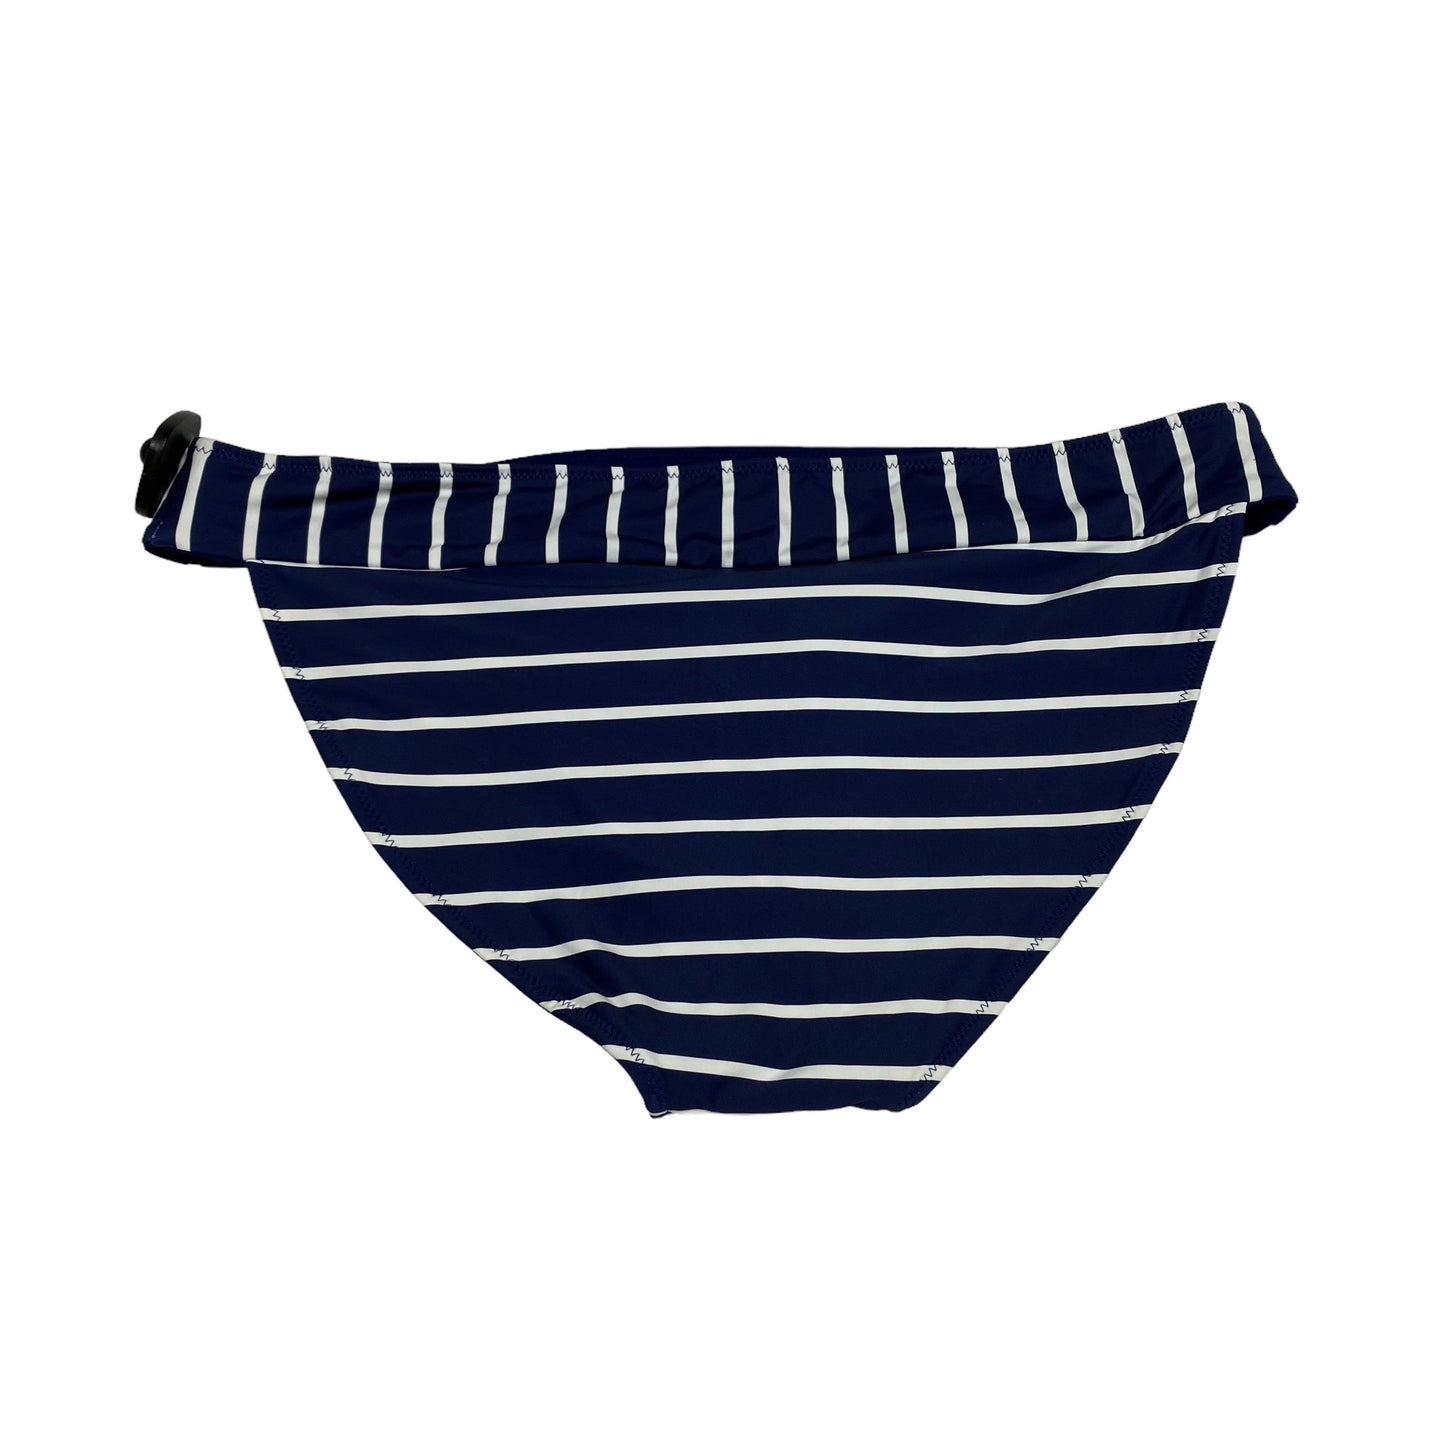 Swimsuit Bottom By Vineyard Vines  Size: Xl